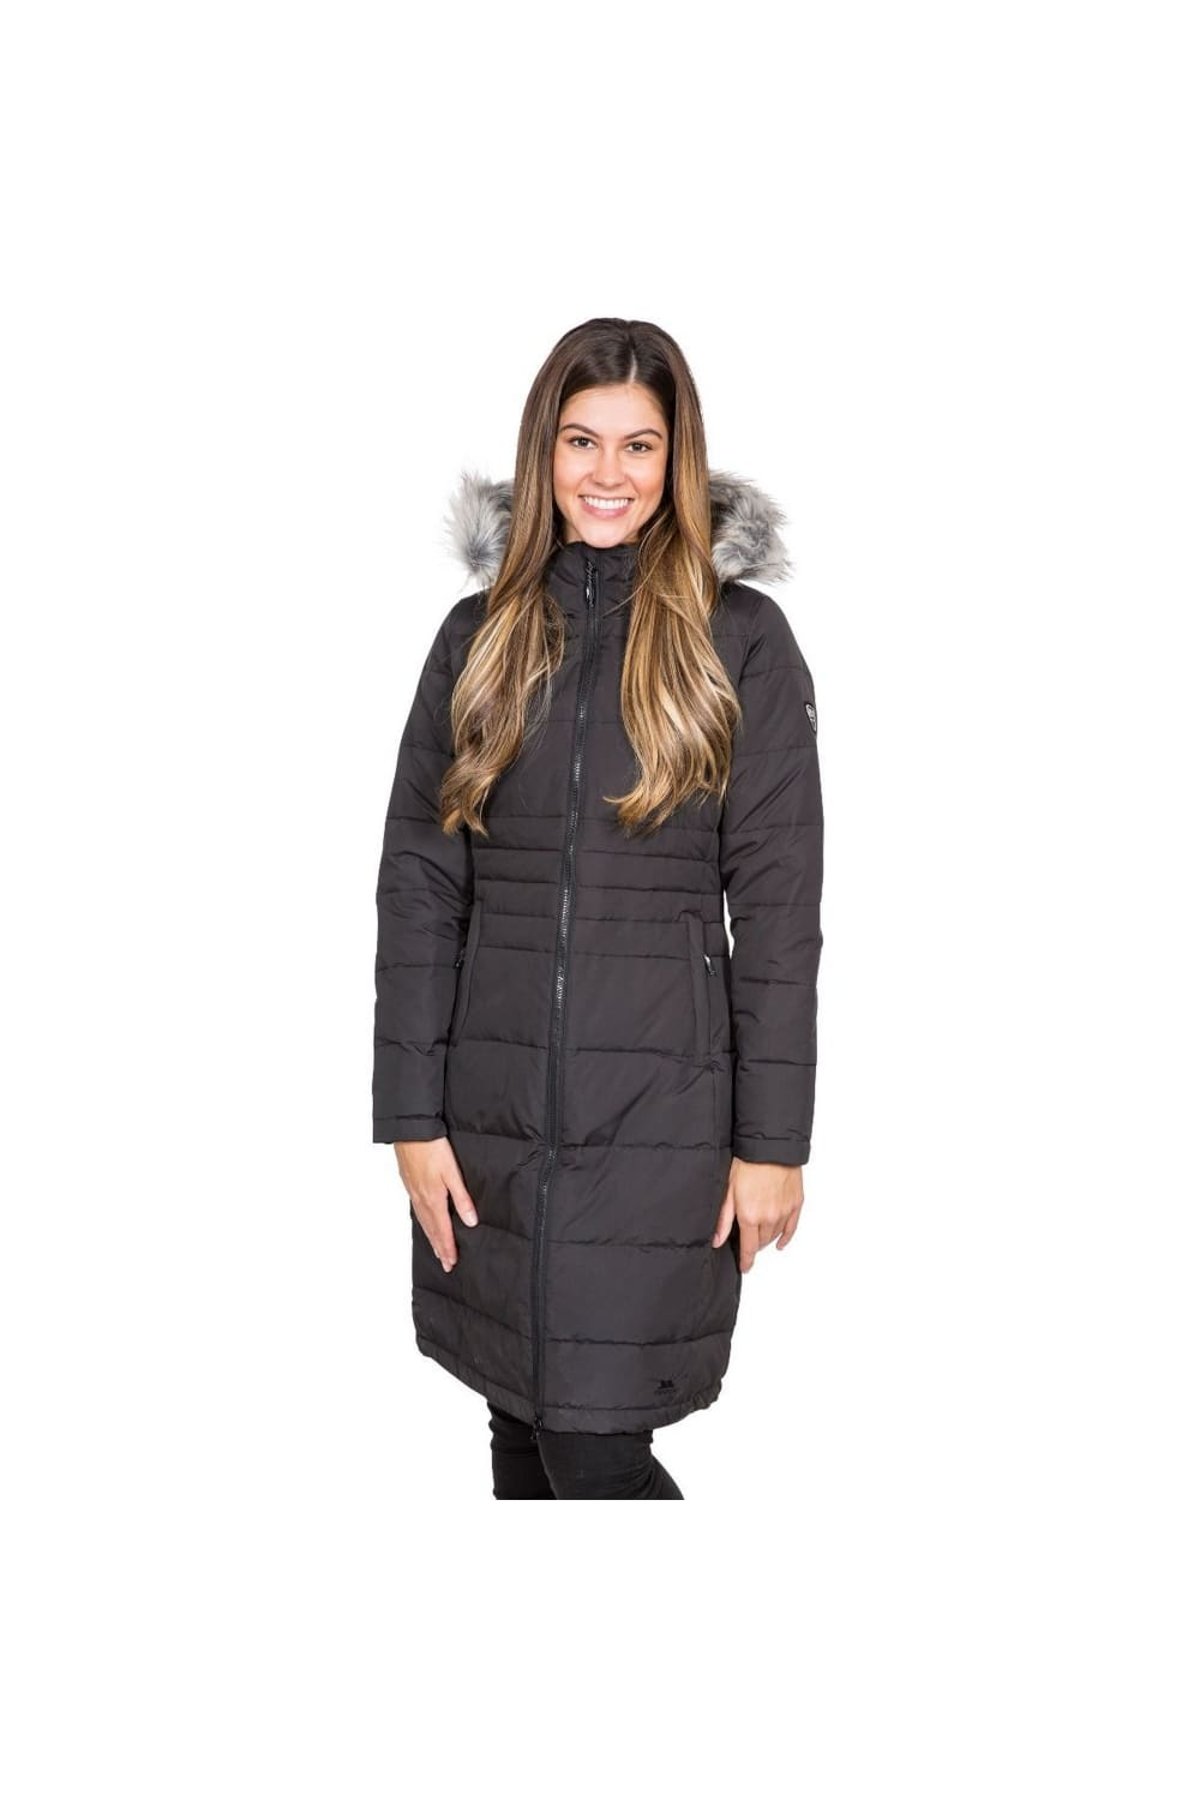 Trespass Phyllis Womens Down Jacket Warm Long Length Parka Coat 